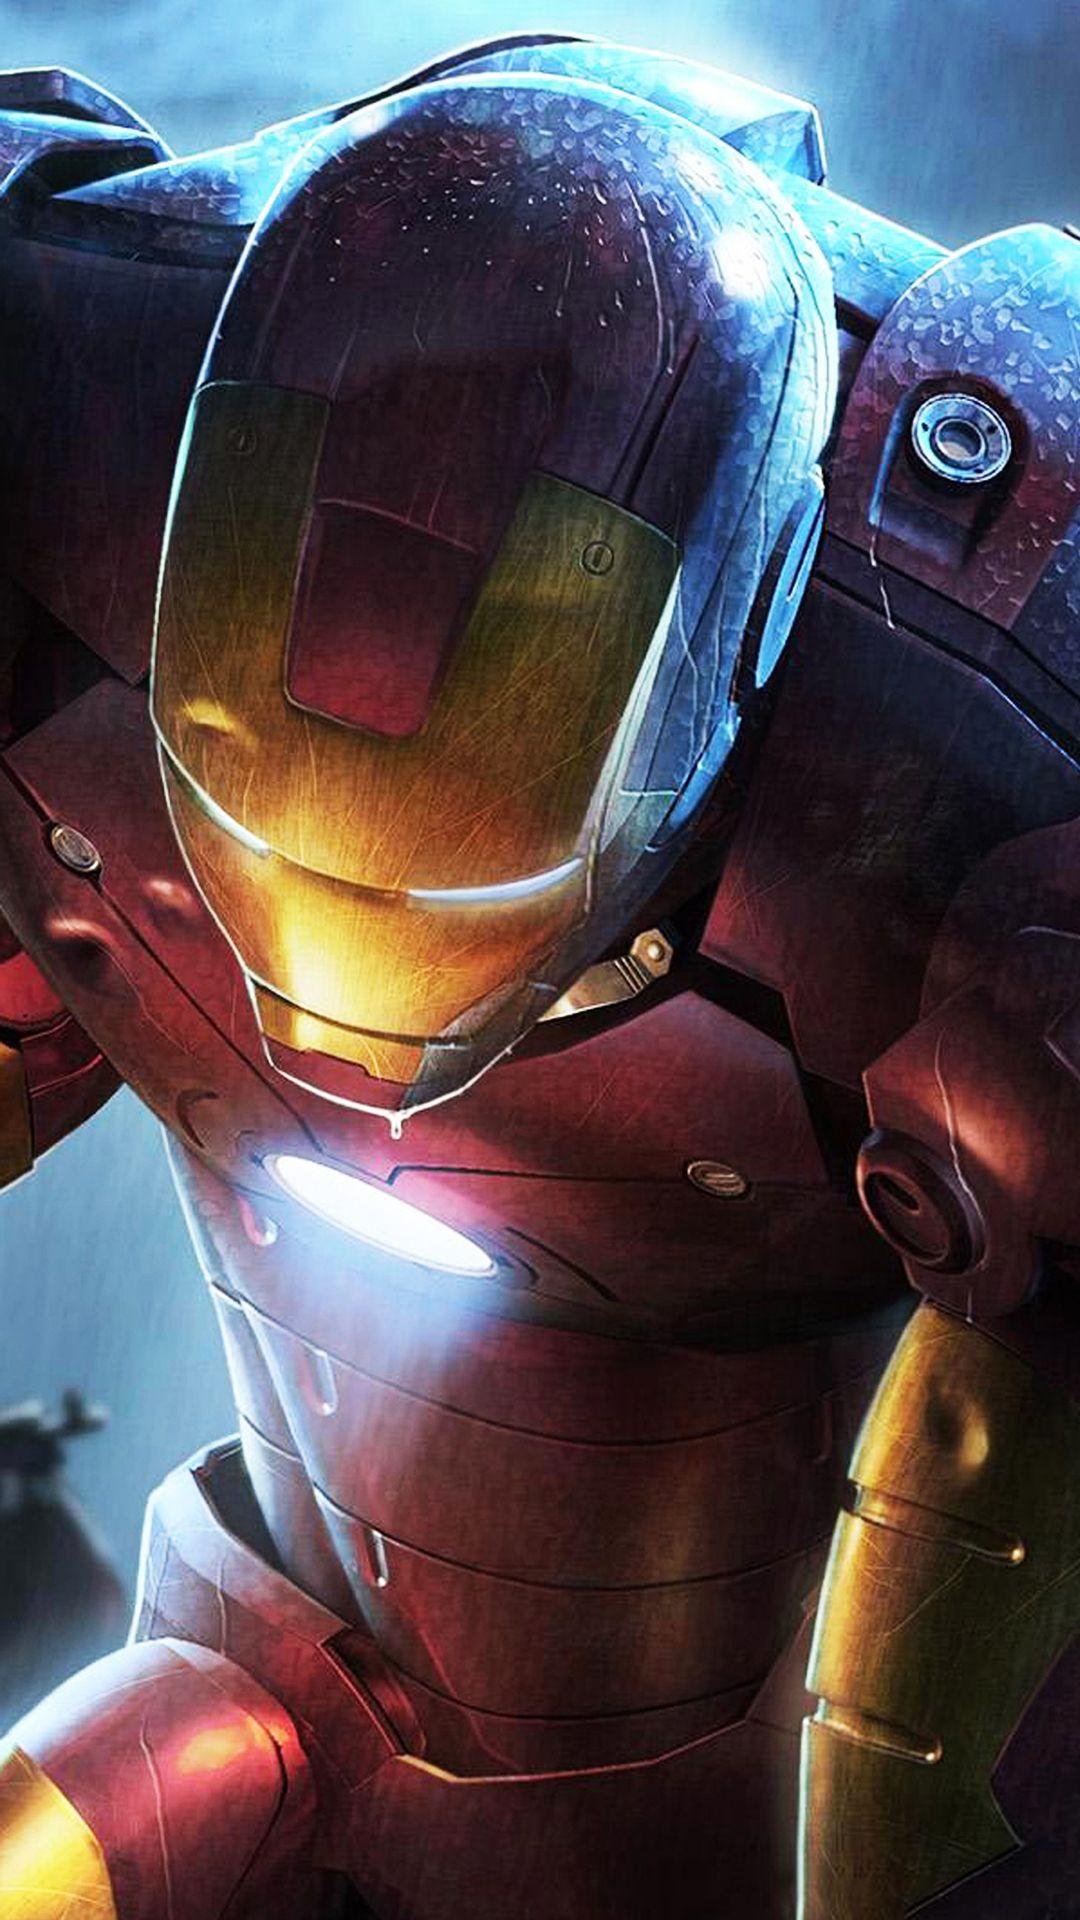 Iron Man Shadow Minimal Android Wallpaper free download